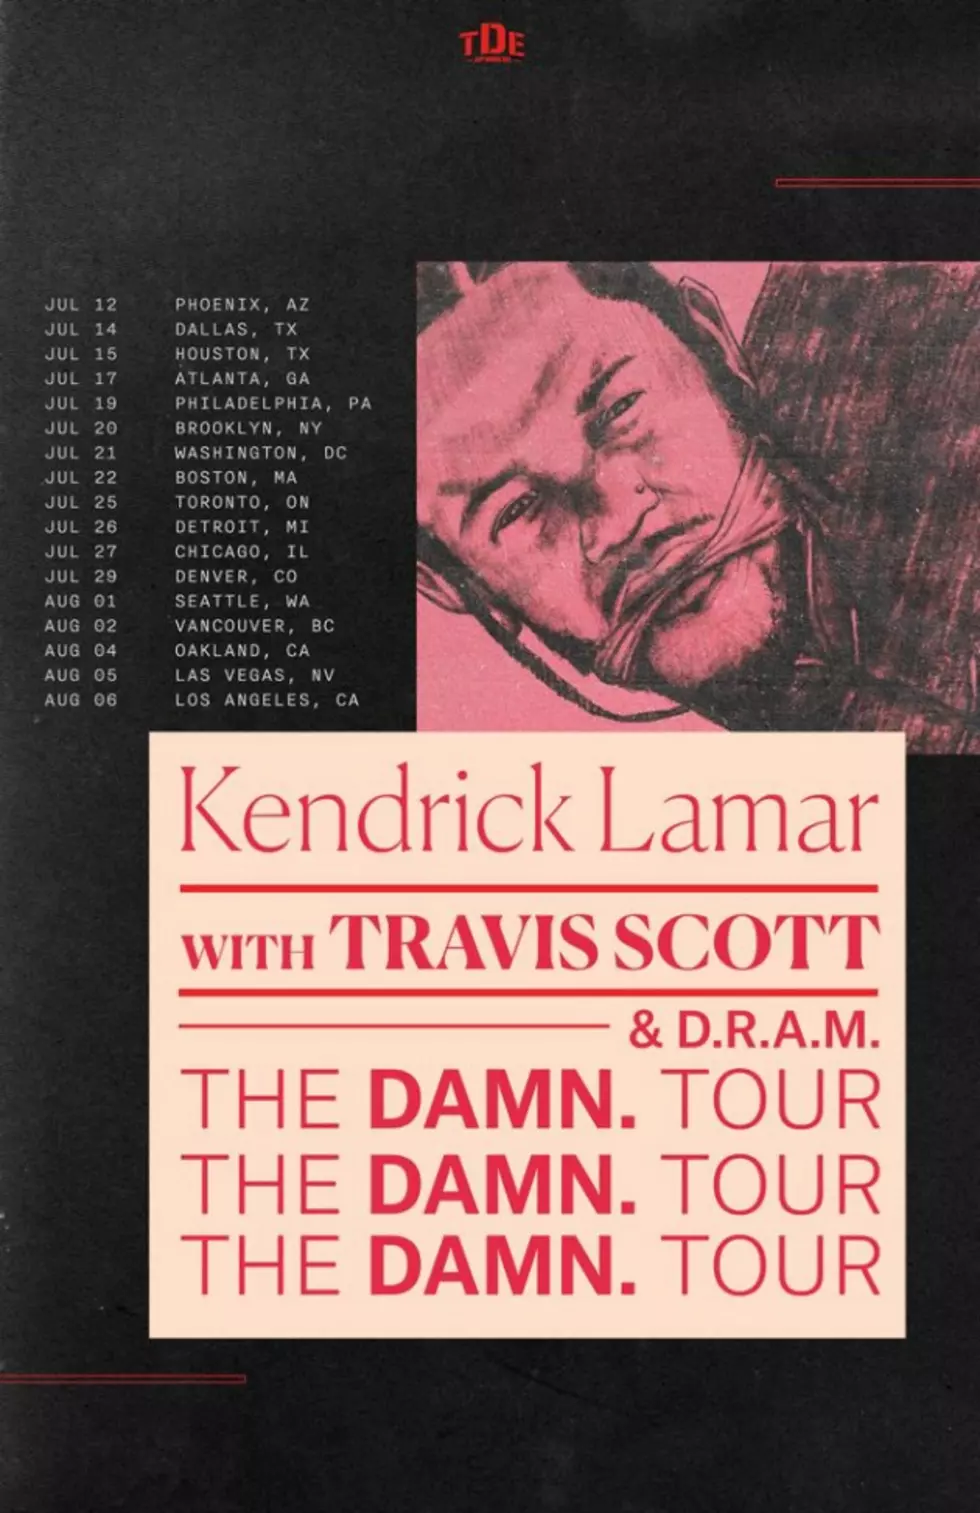 Kendrick Lamar Reveals Damn. Tour Dates - XXL